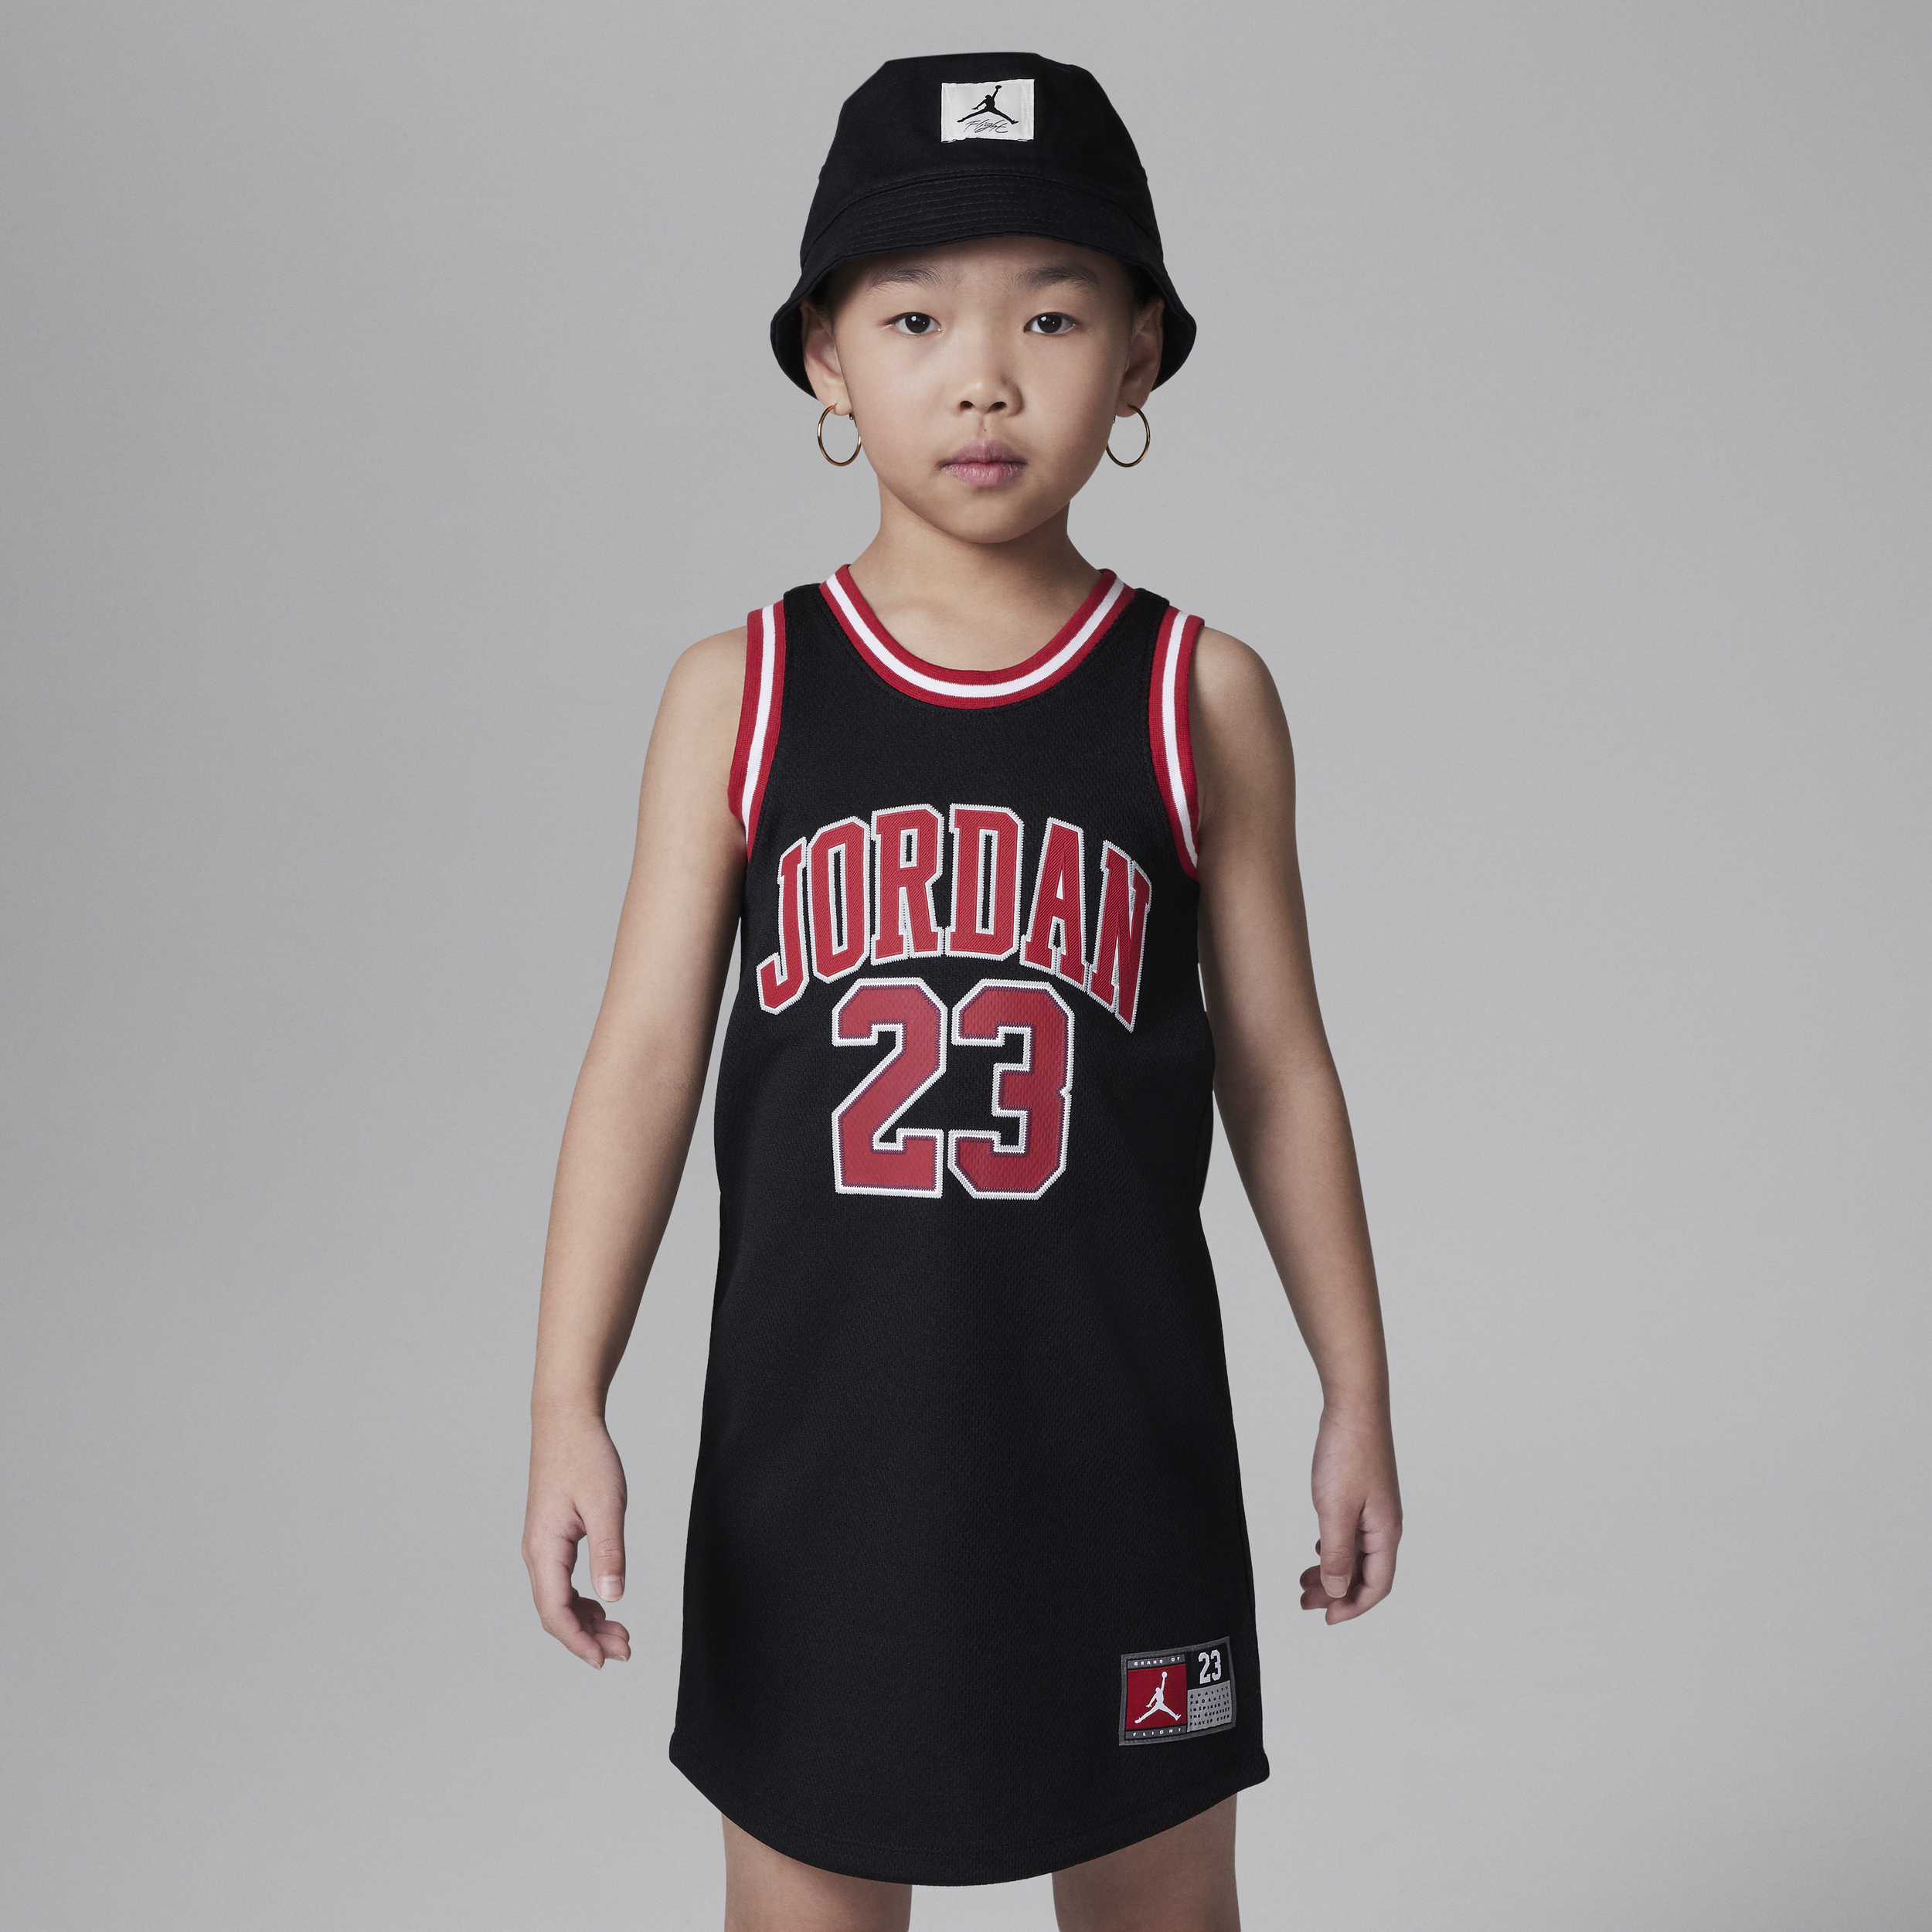 Nike Abito Jordan 23 Jersey – Bambino/a - Nero